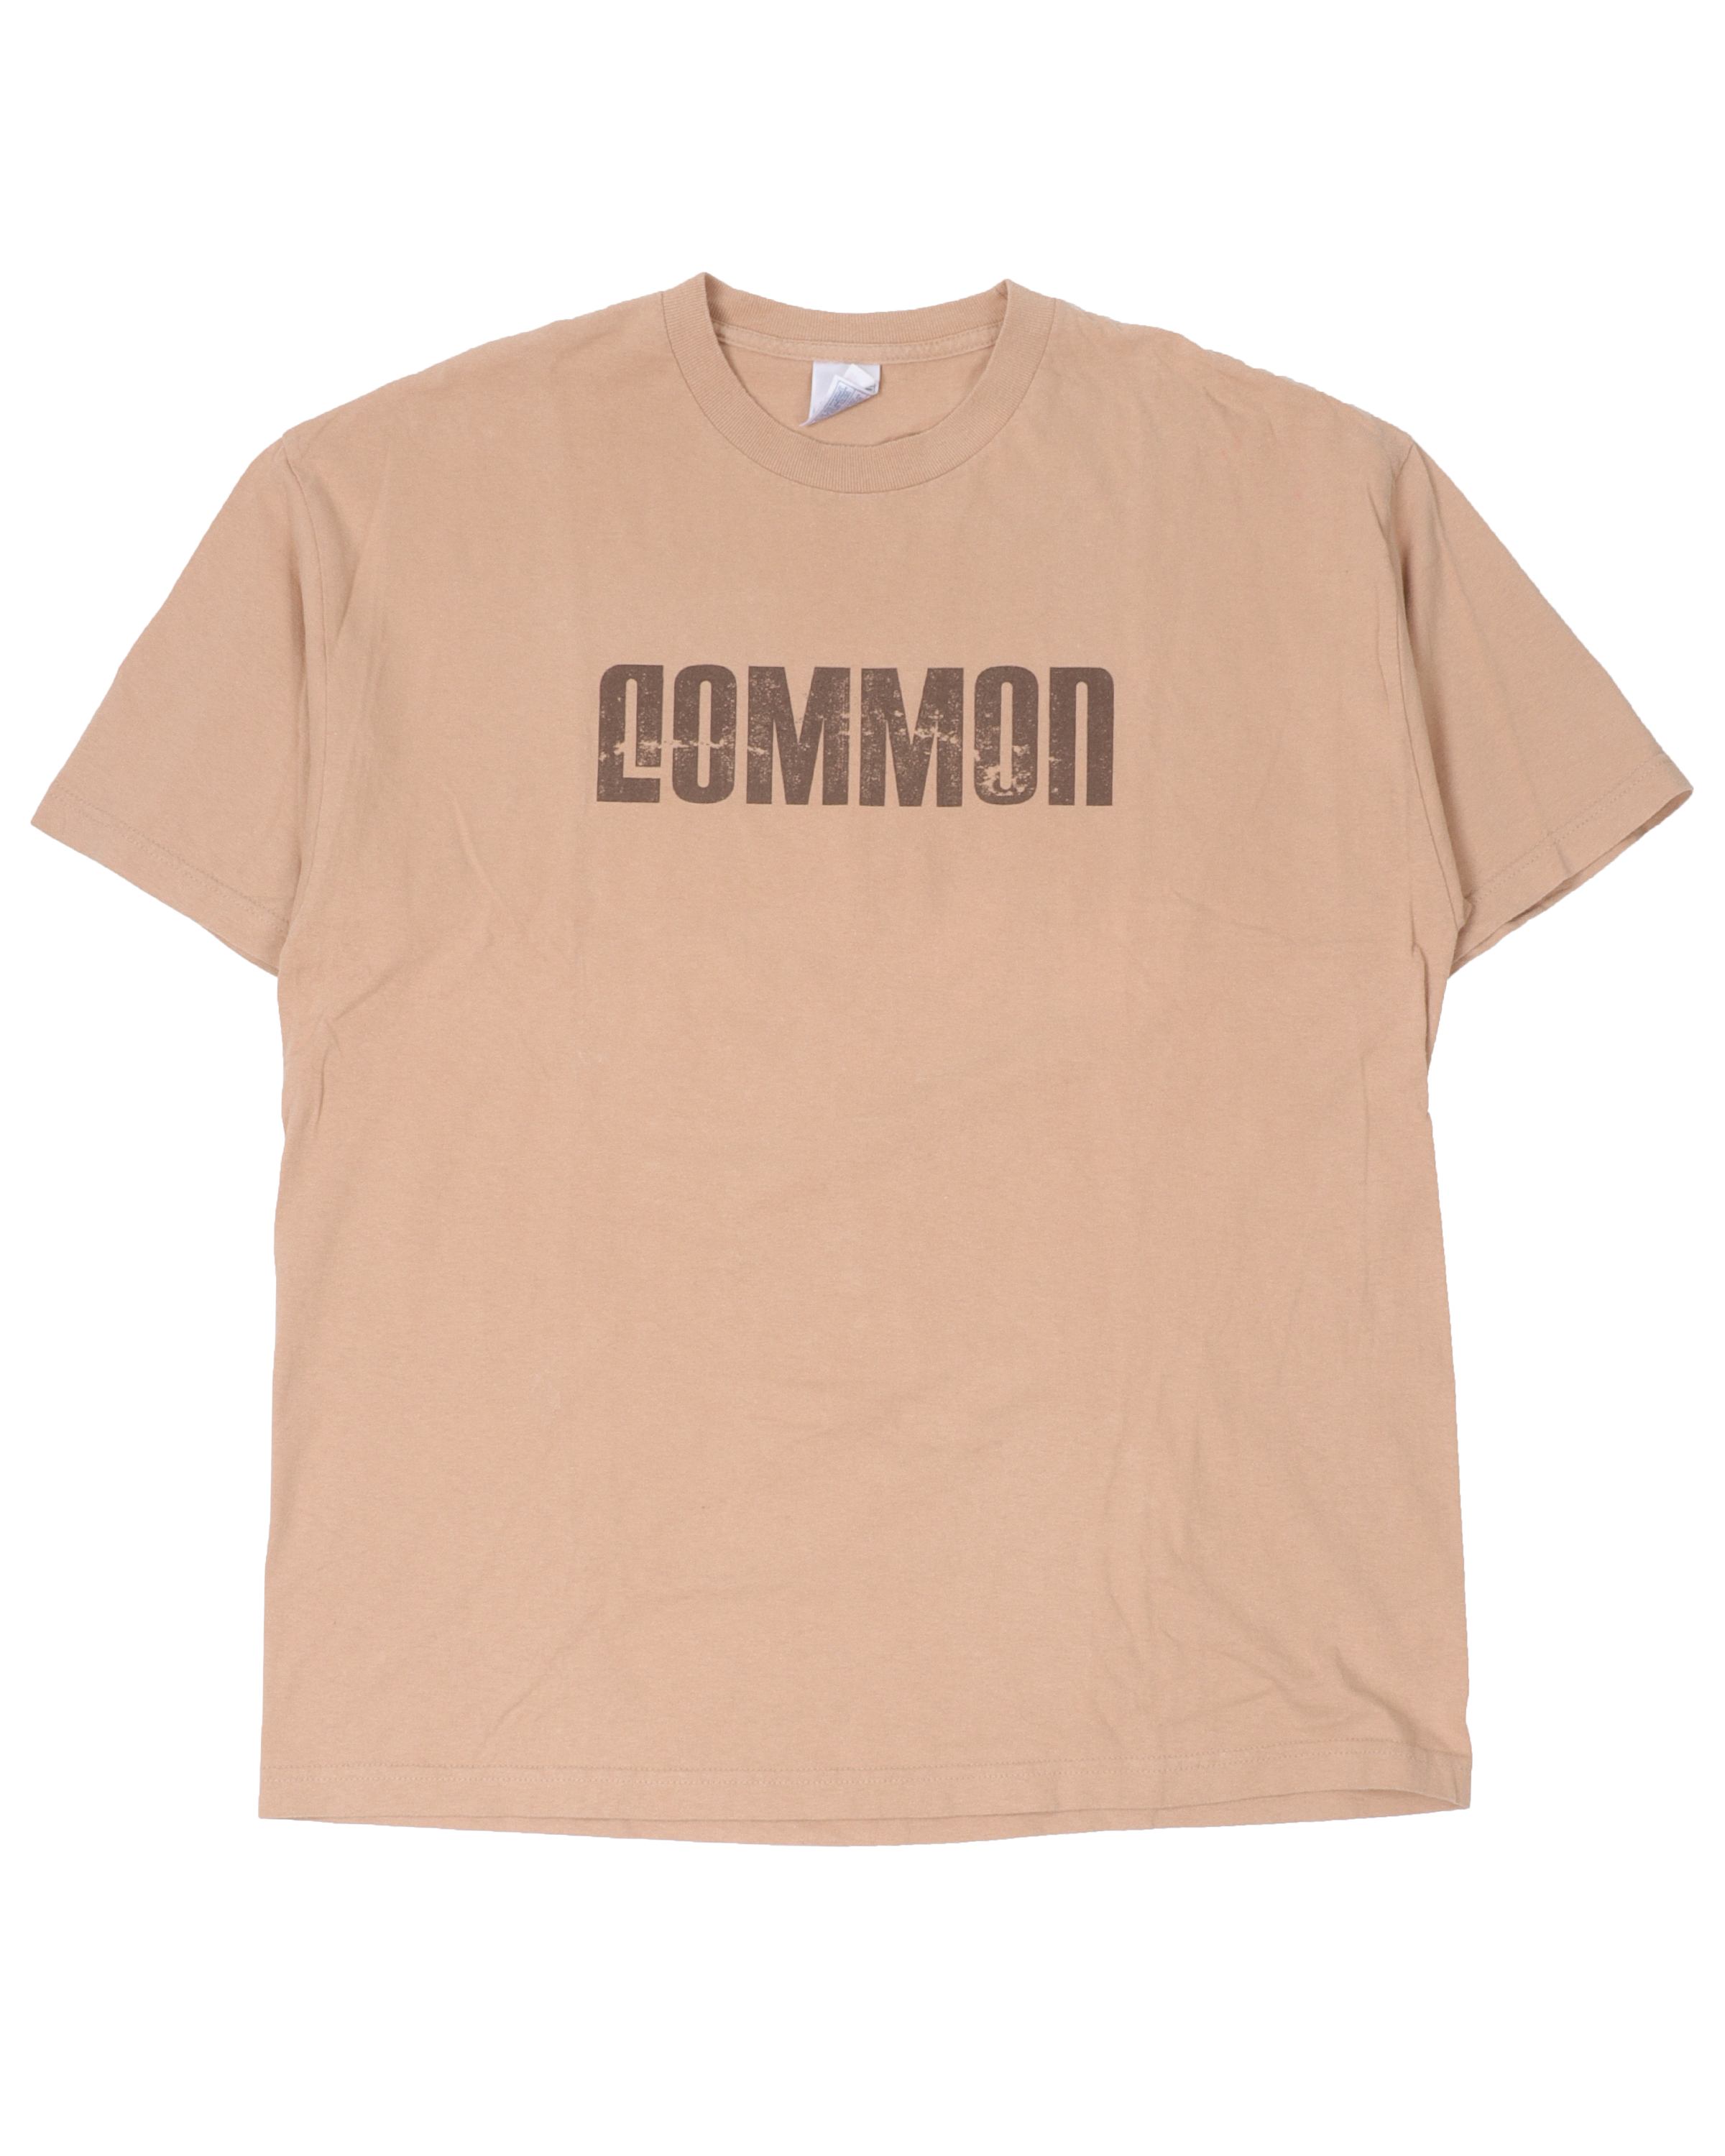 Common Be Album T-Shirt